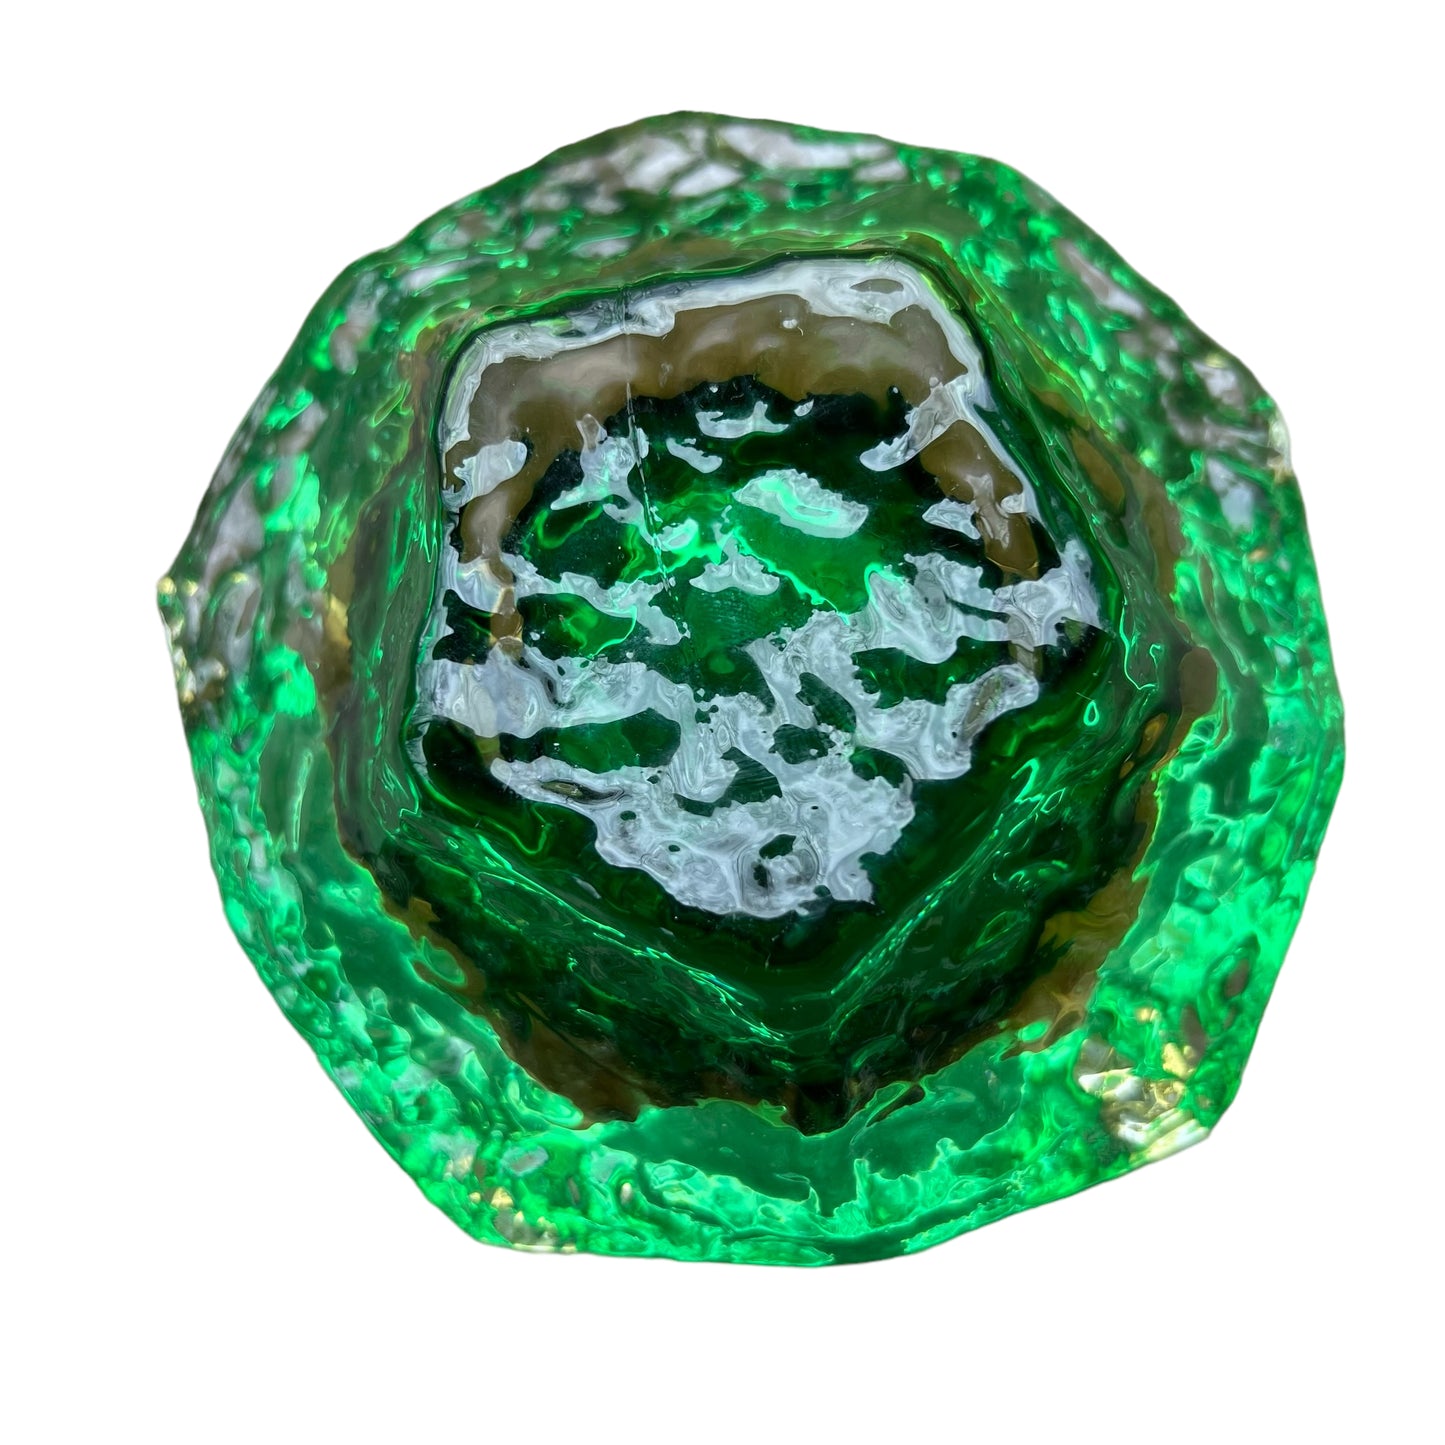 Mandruzzato Murano green Faceted Ice Sommerso Pentagonal Ashtray/Bowl Glass